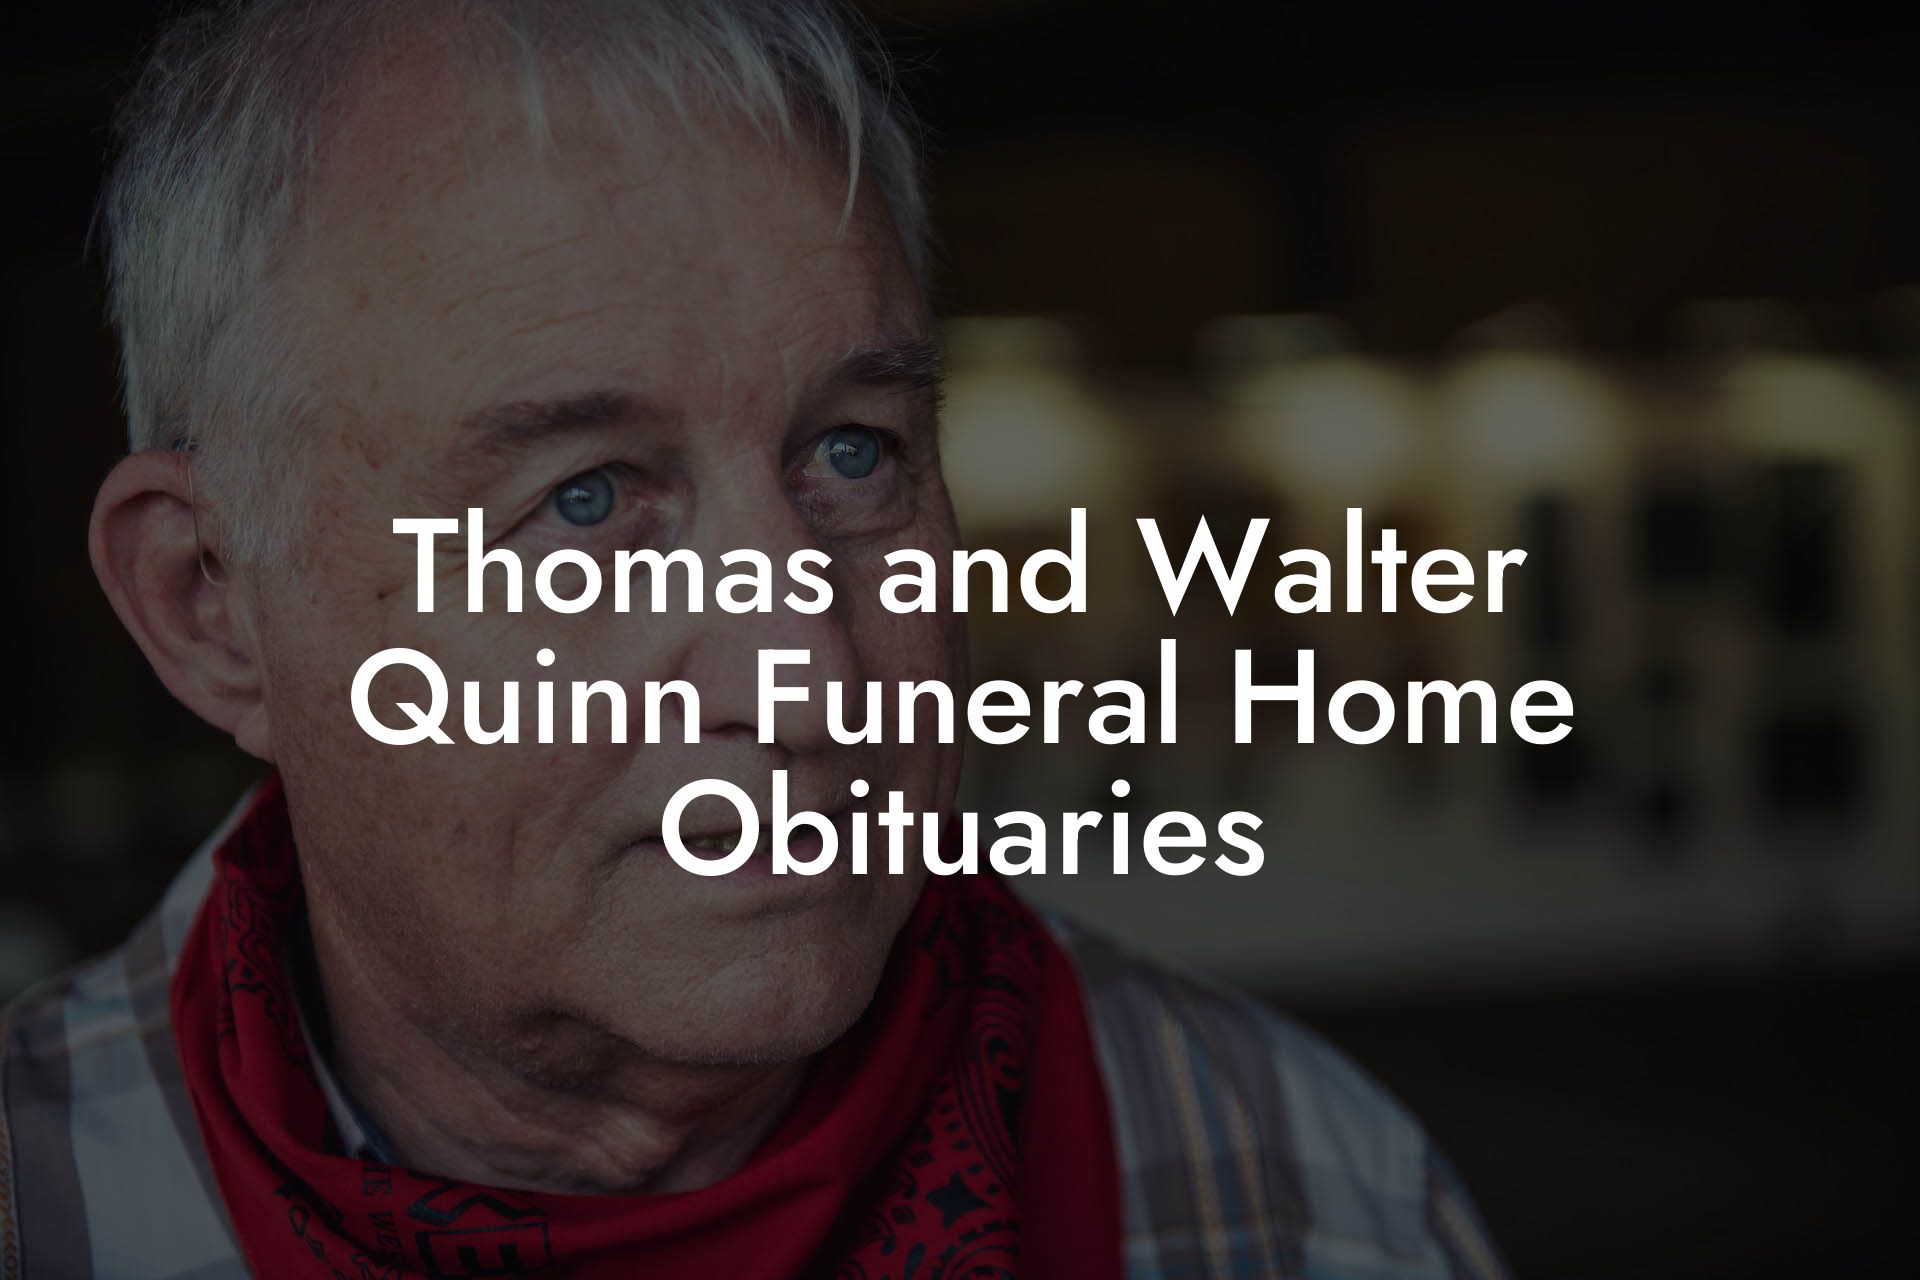 Thomas and Walter Quinn Funeral Home Obituaries